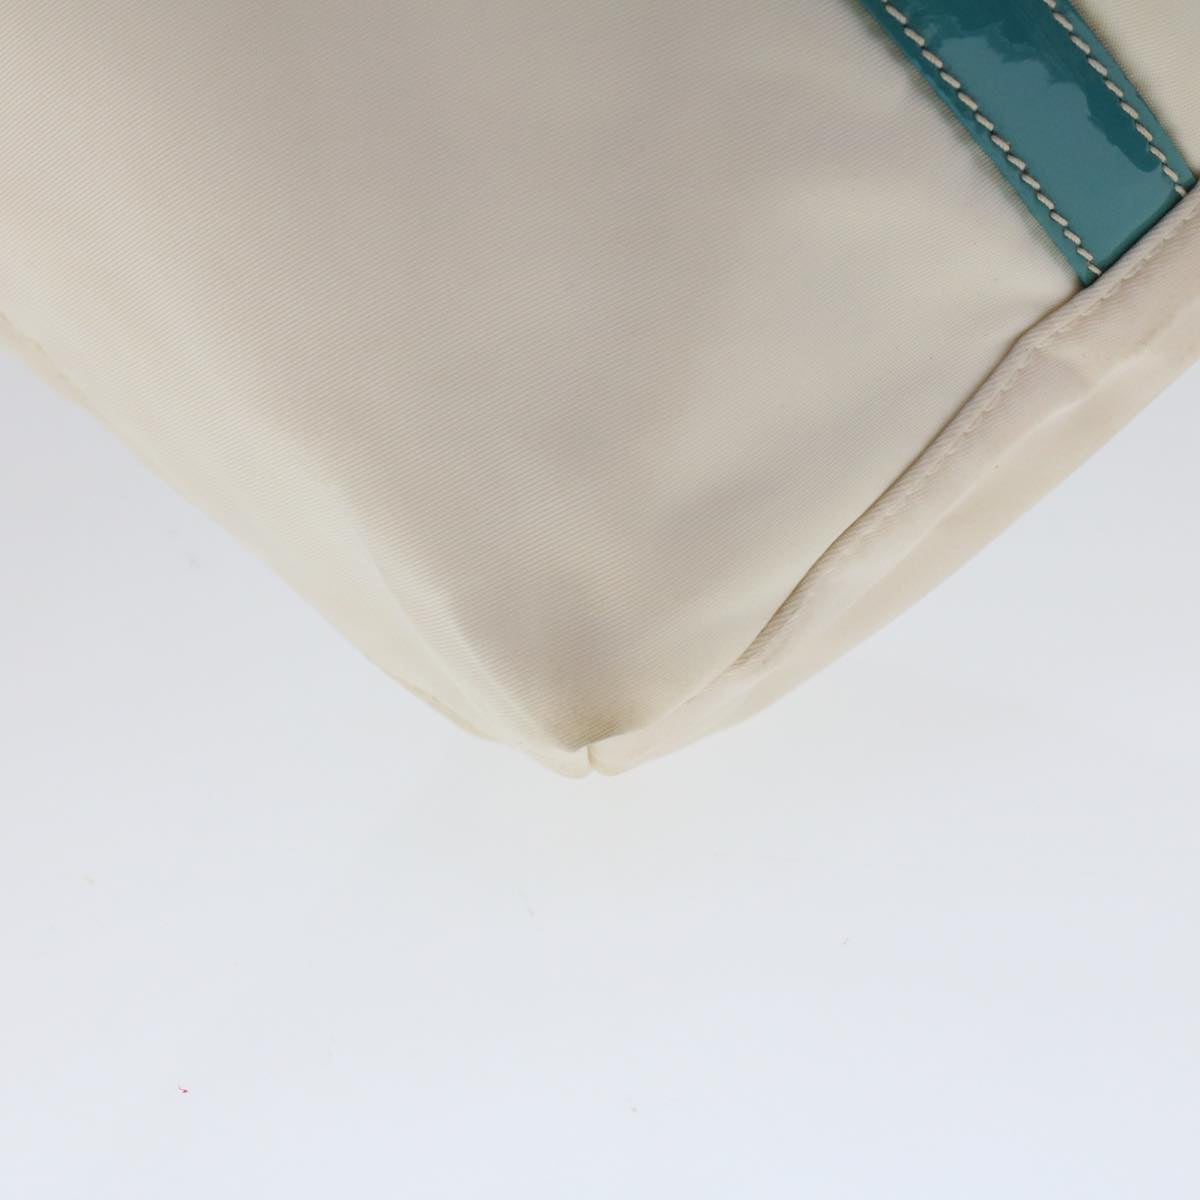 PRADA Hand Bag Nylon 2way White Turquoise Blue Auth 48007